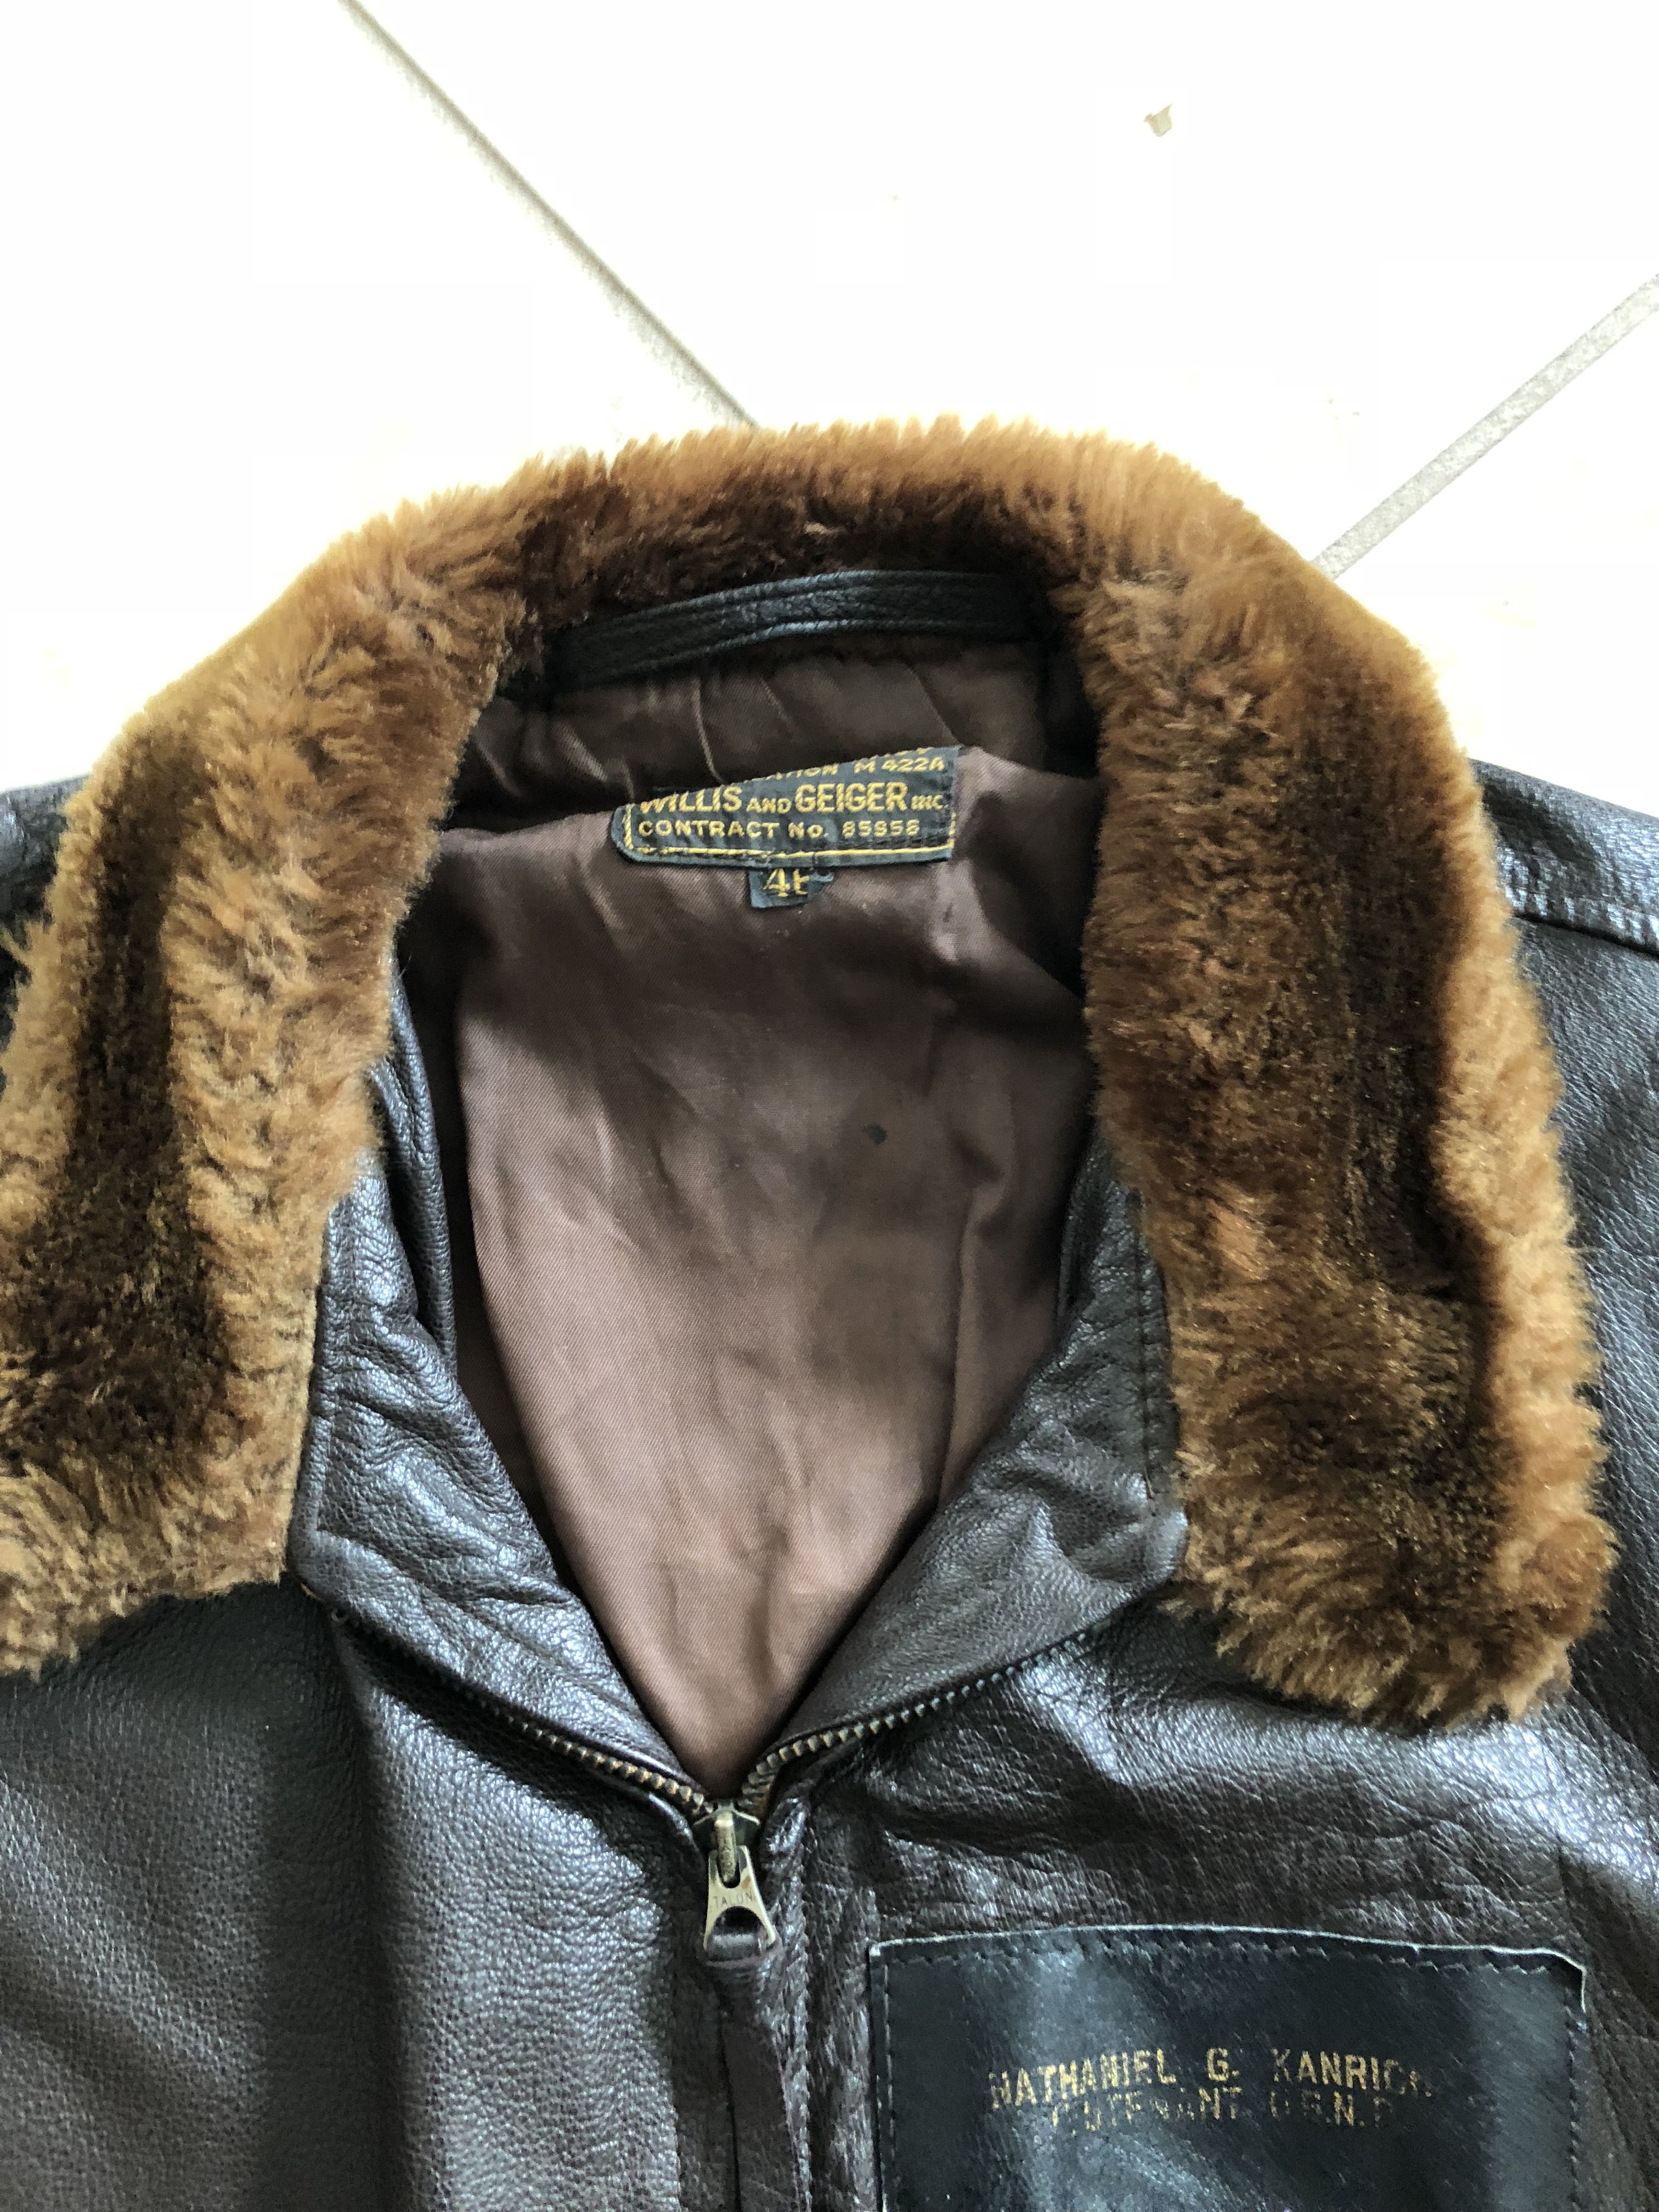 Silk Stitched USN M-422A Jackets | Vintage Leather Jackets Forum